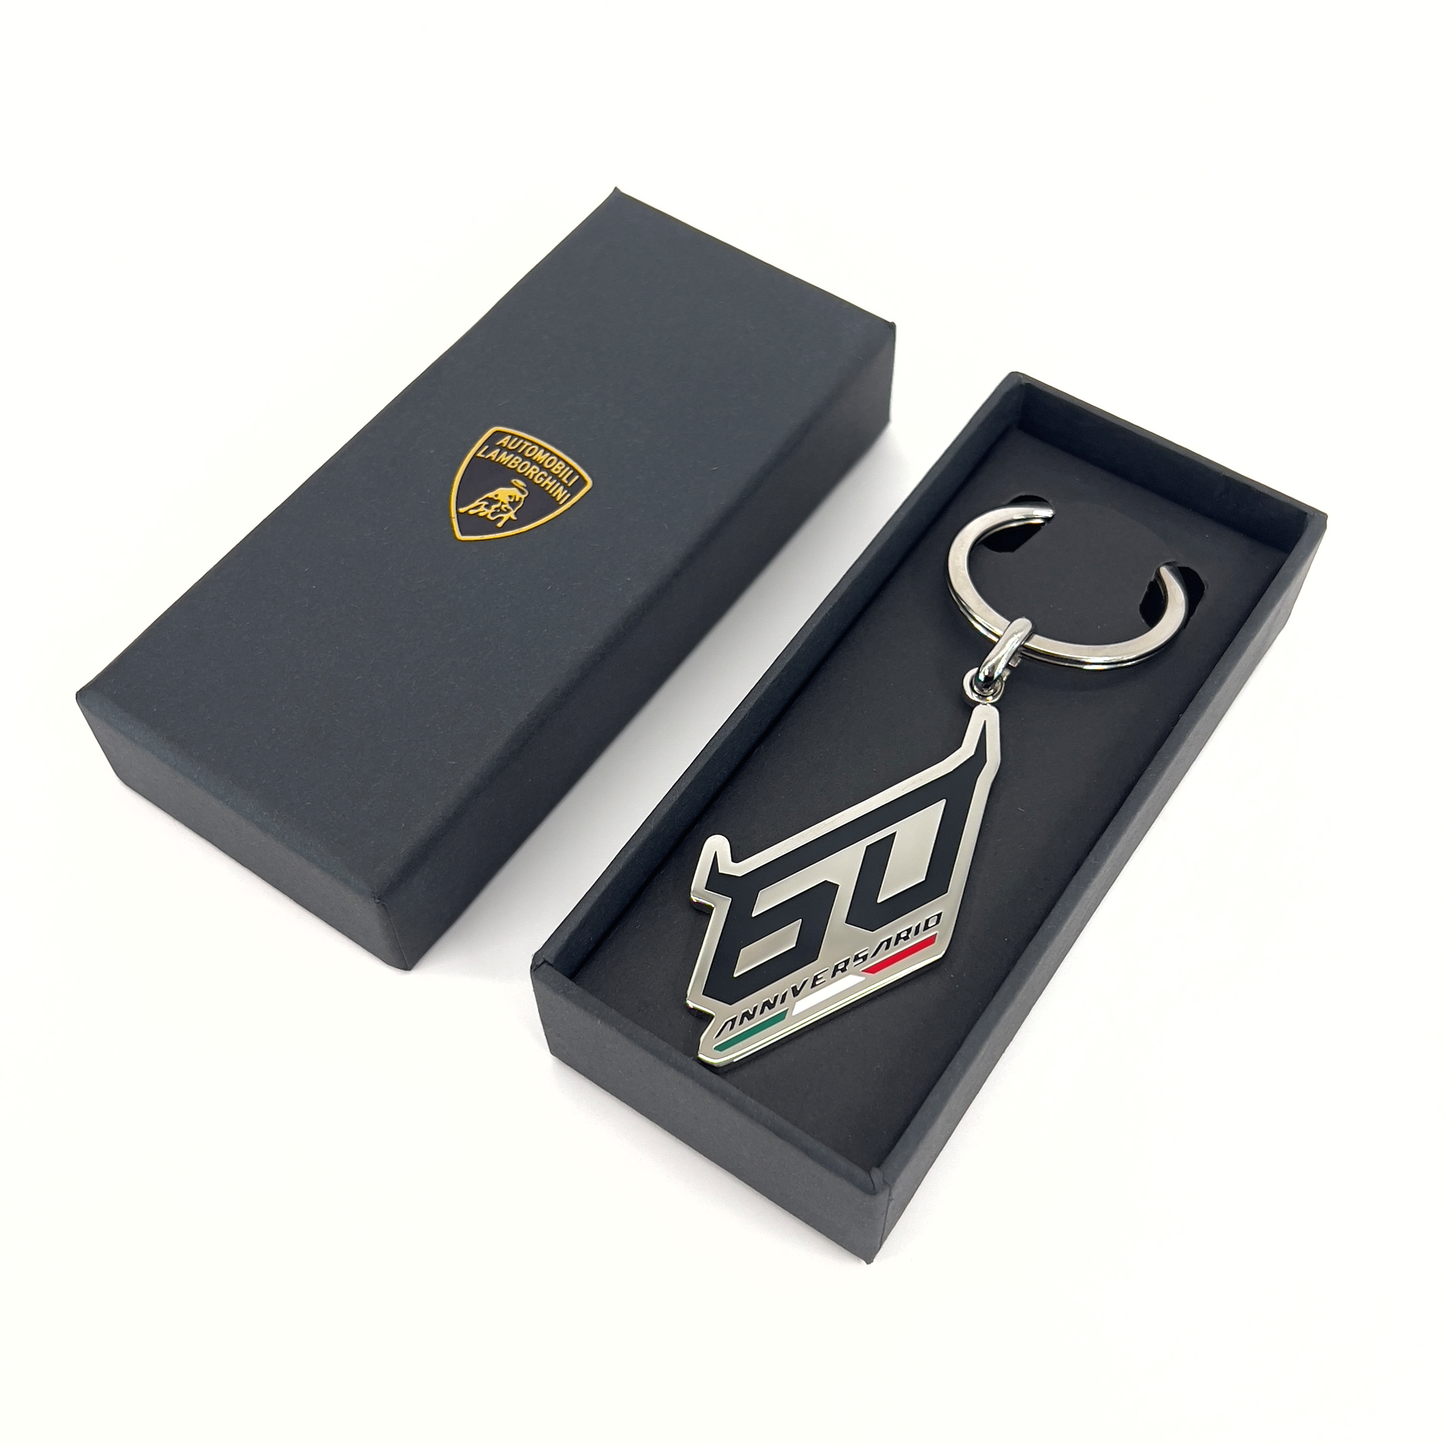 60th Anniversary Special-Edition Automobili-Lamborghini Keyring